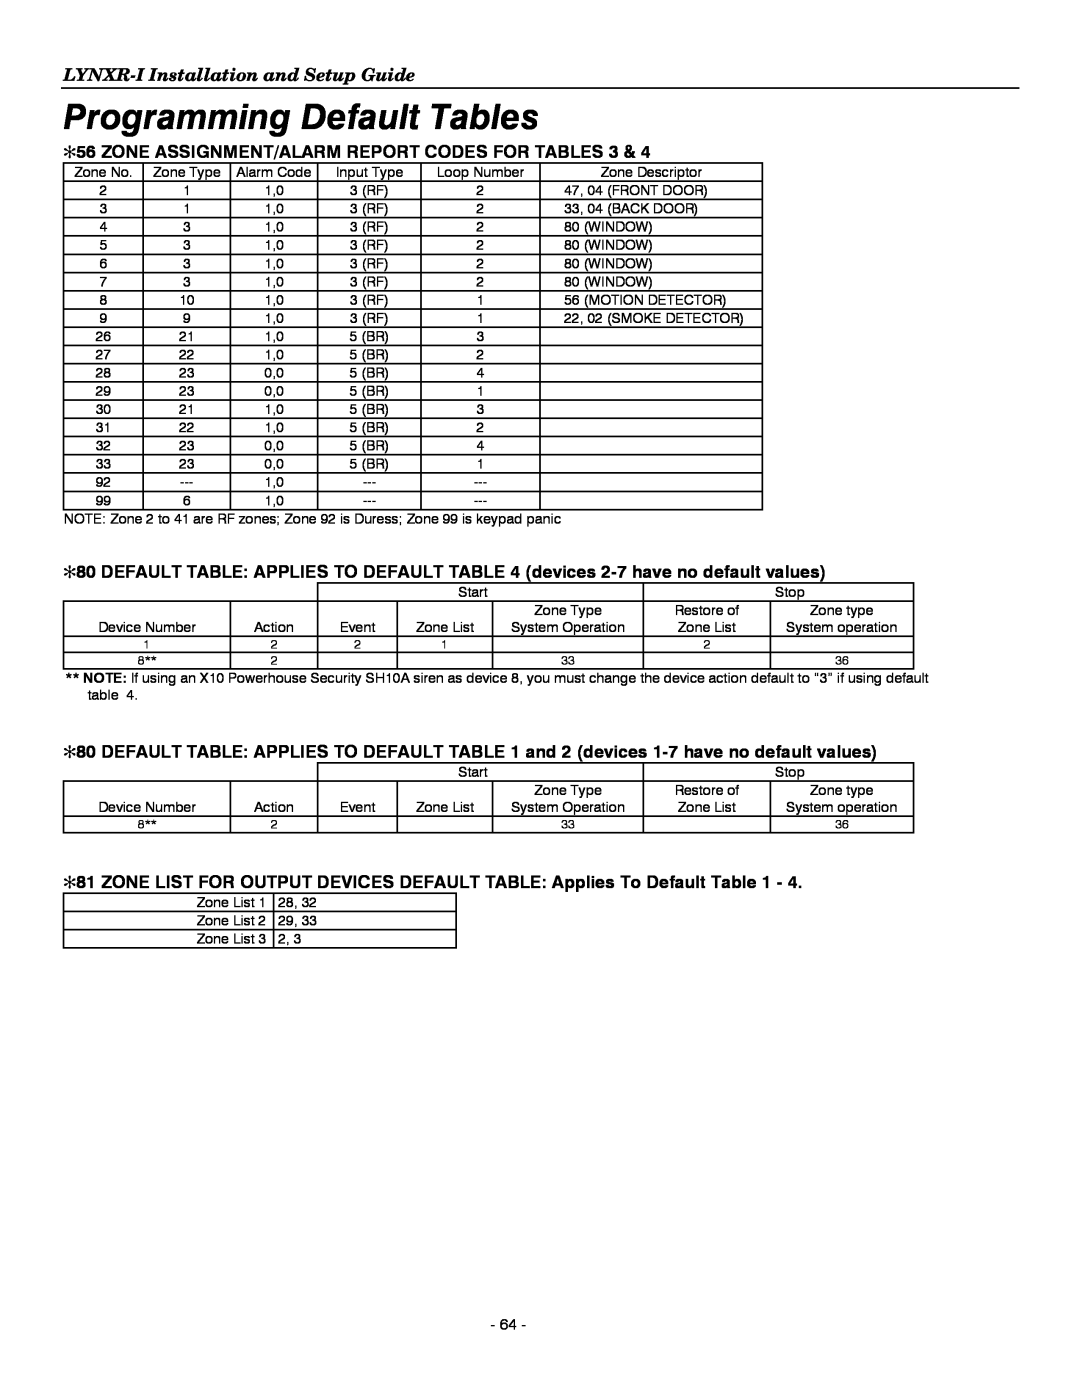 Honeywell K14114 3/06 Rev.B setup guide Programming Default Tables, LYNXR-IInstallation and Setup Guide, Zone No 